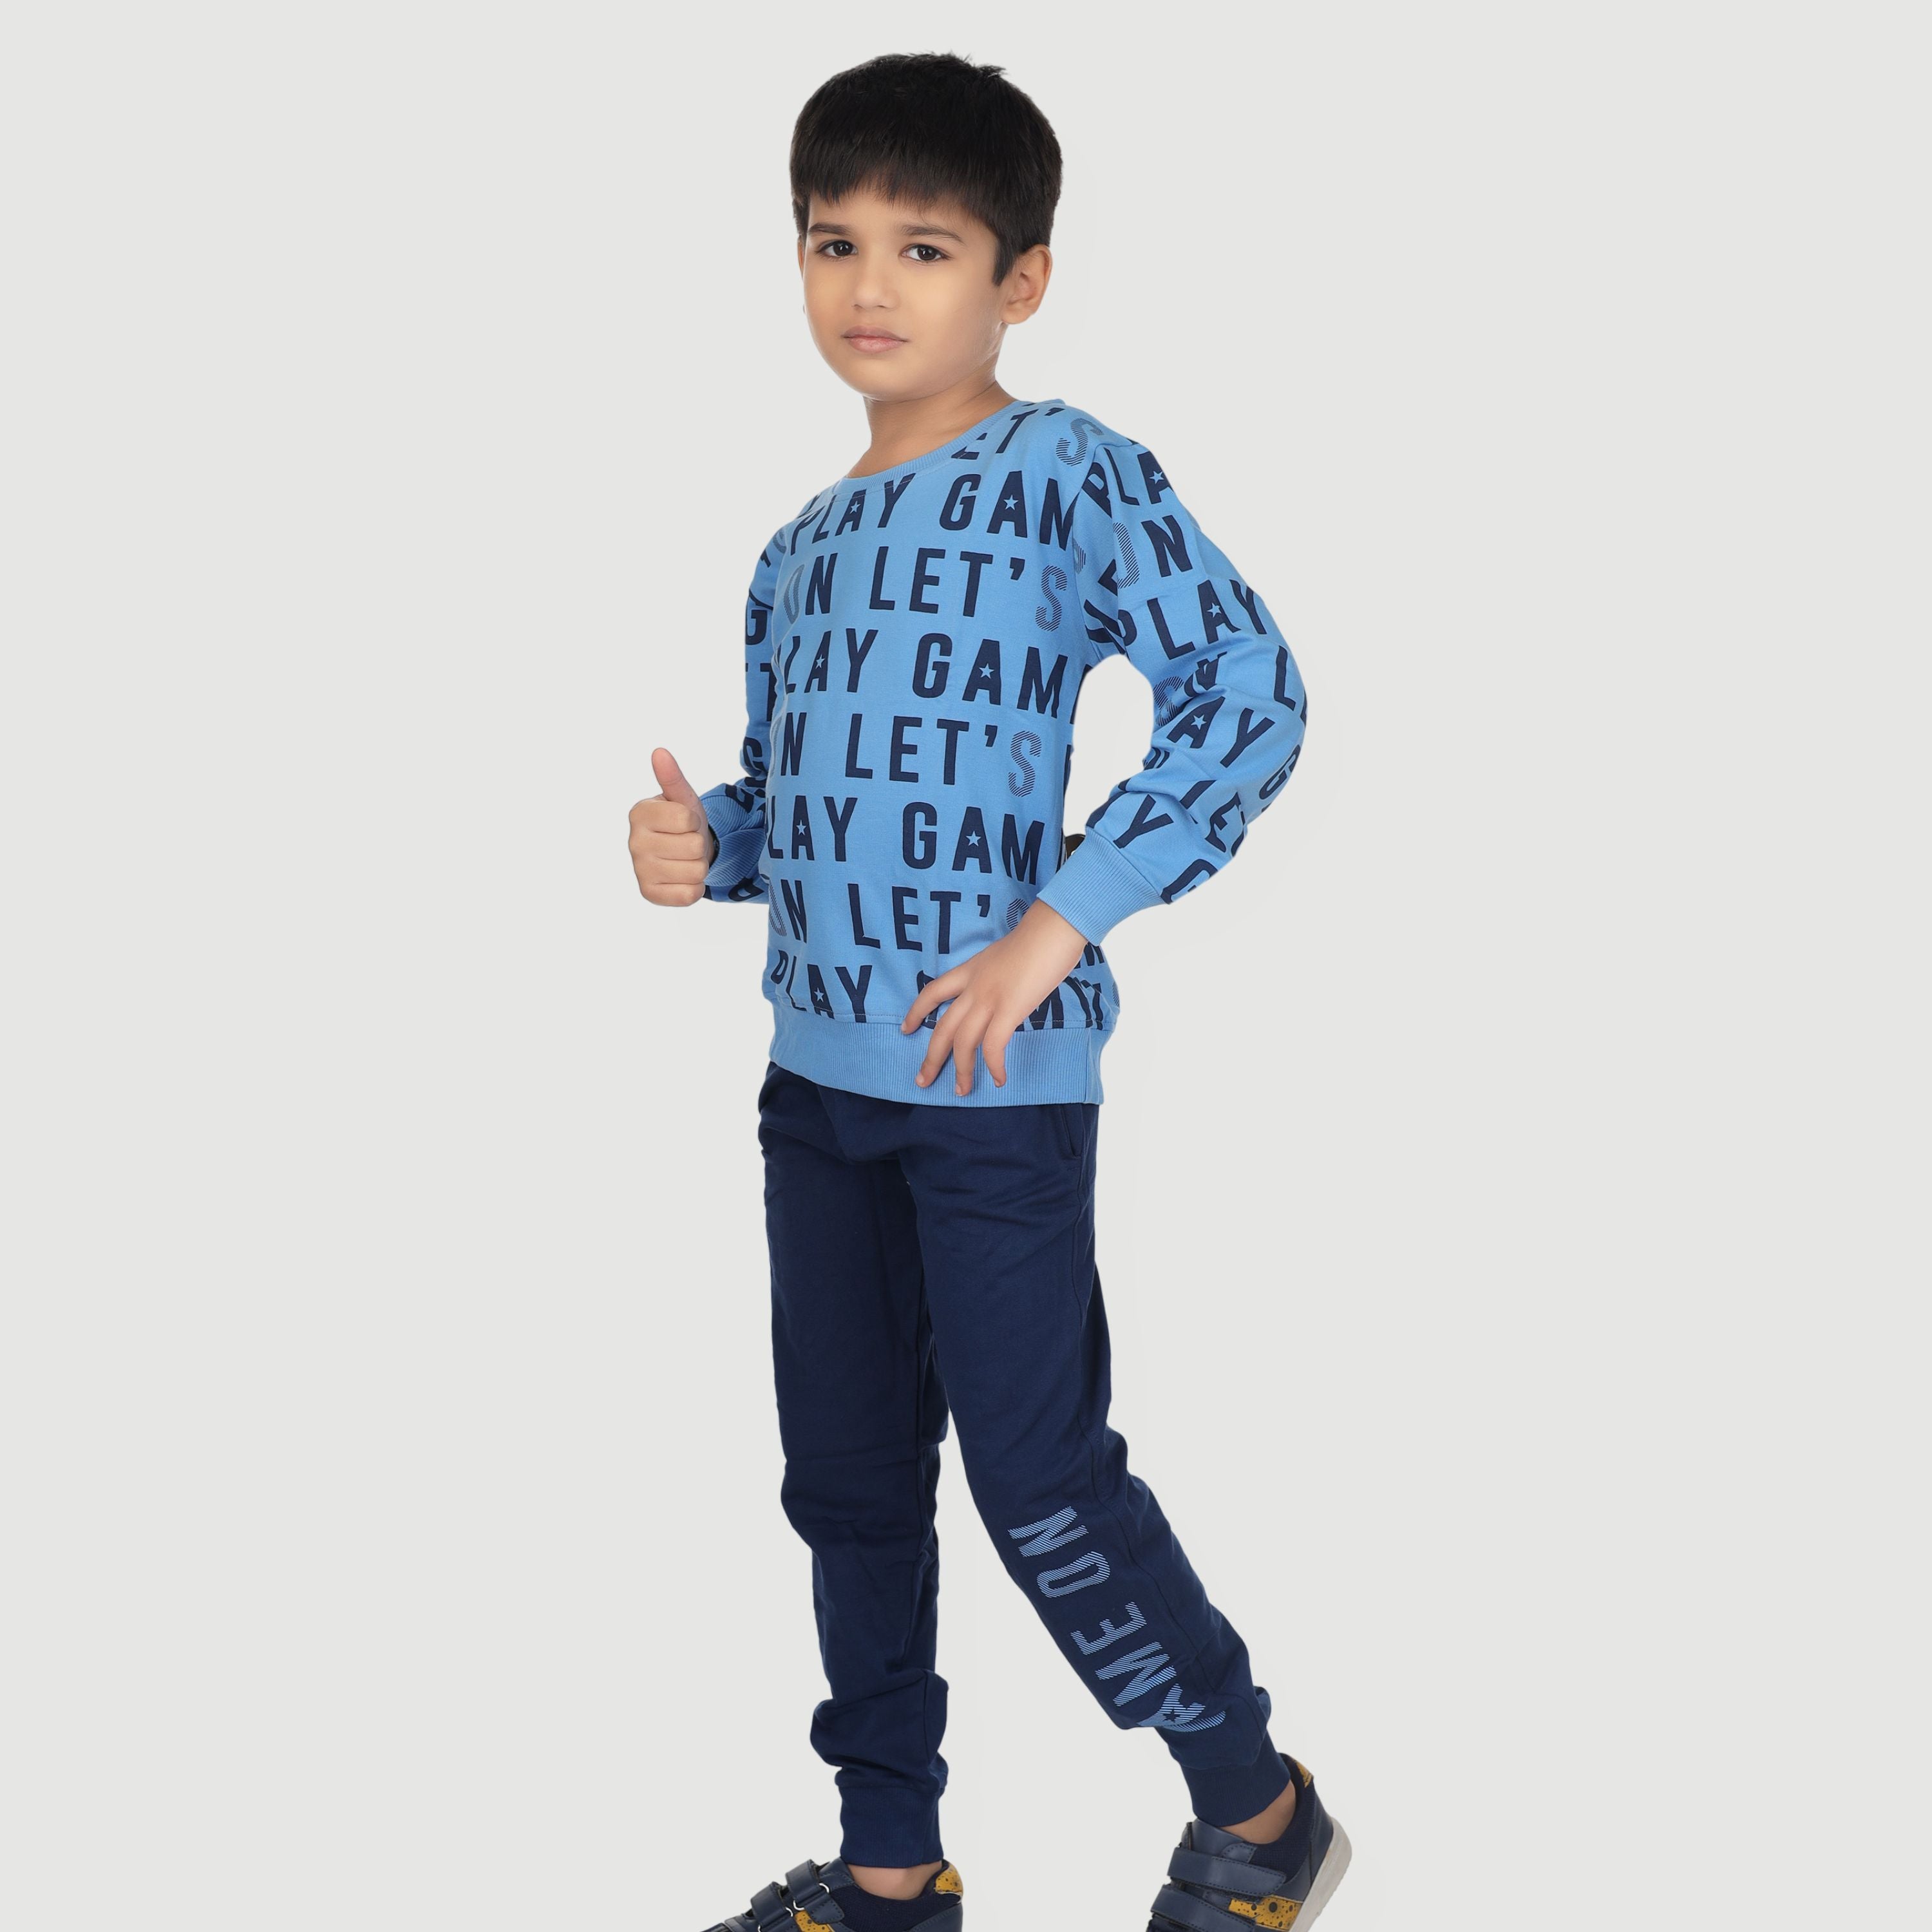 CLOTHING SET FOR BOY - BLUE